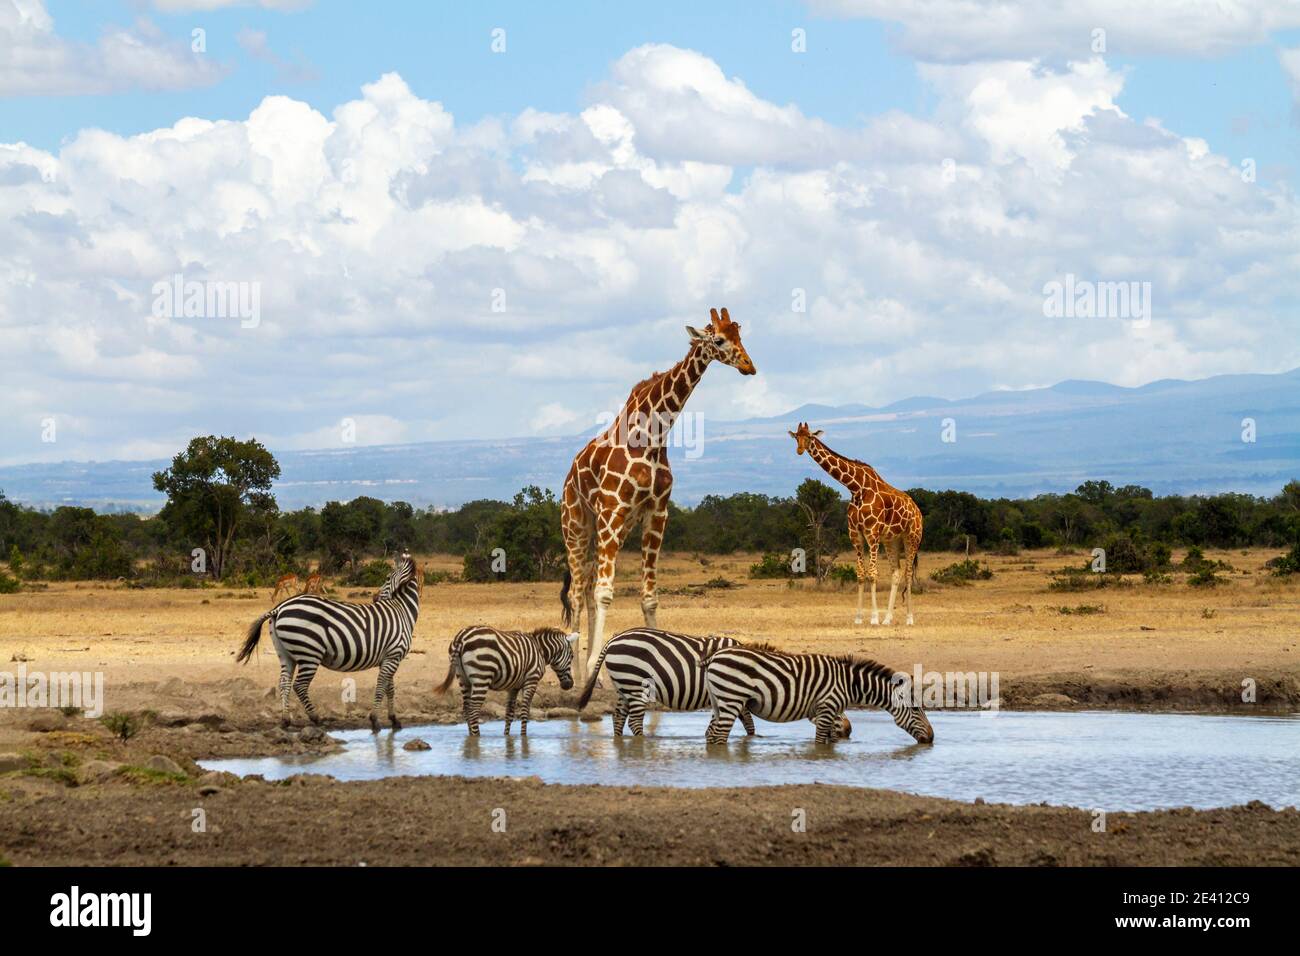 Giraffes wait in queue at waterhole as zebras drink water. Ol Pejeta Conservancy, Kenya. Funny scene of wildlife spotted on African safari holiday Stock Photo